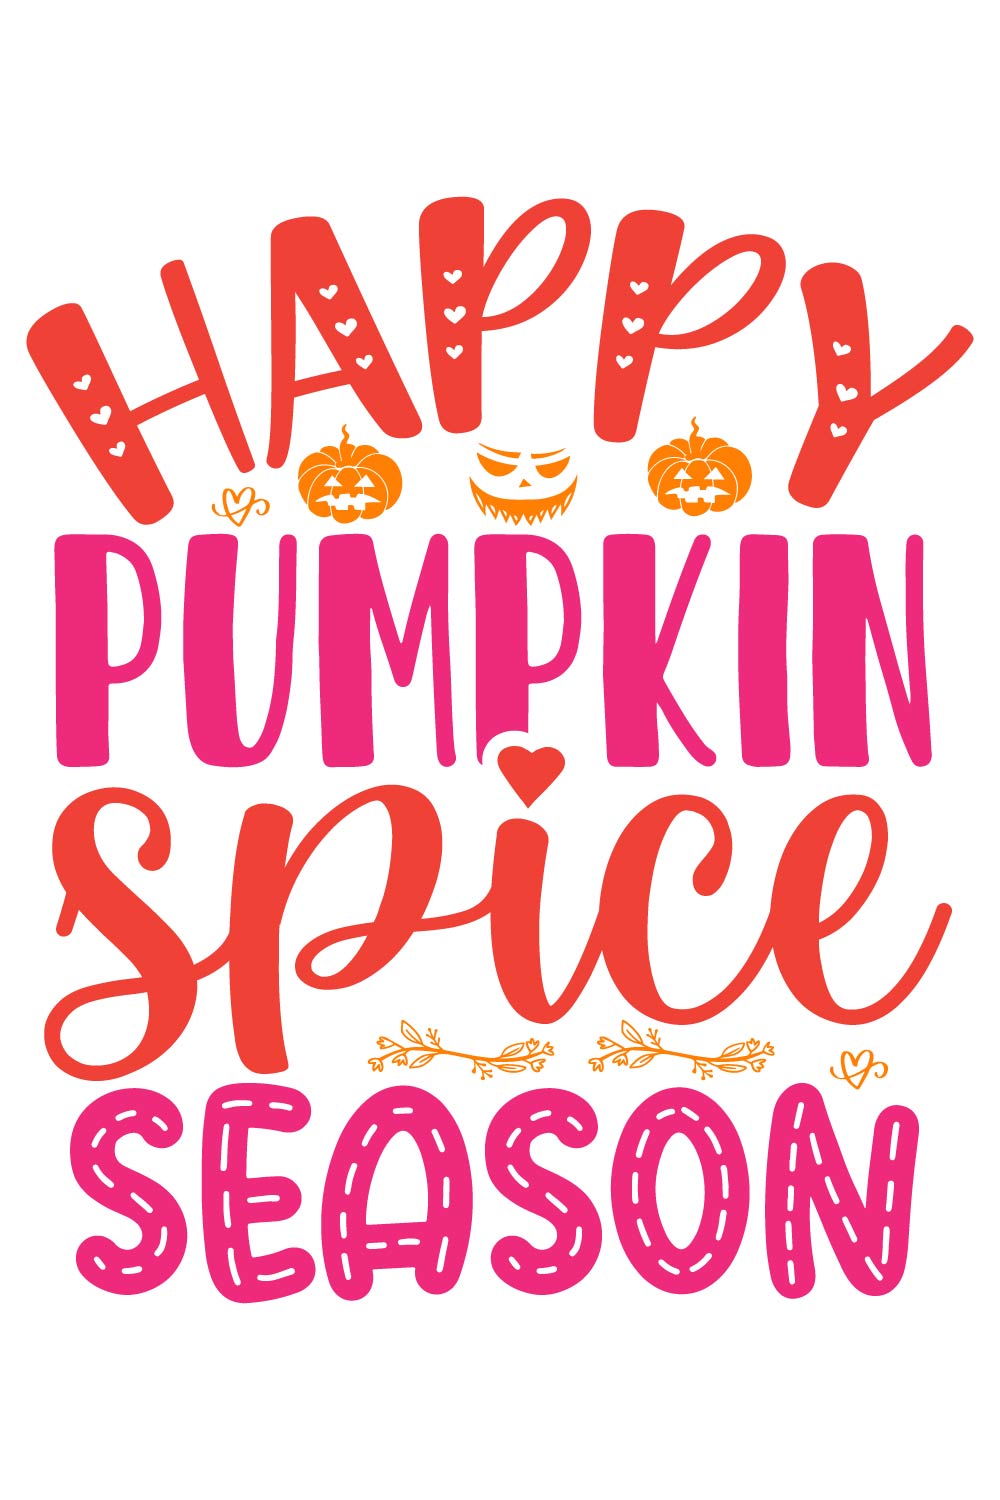 Image with a unique inscription for prints Happy pumpkin spice season.